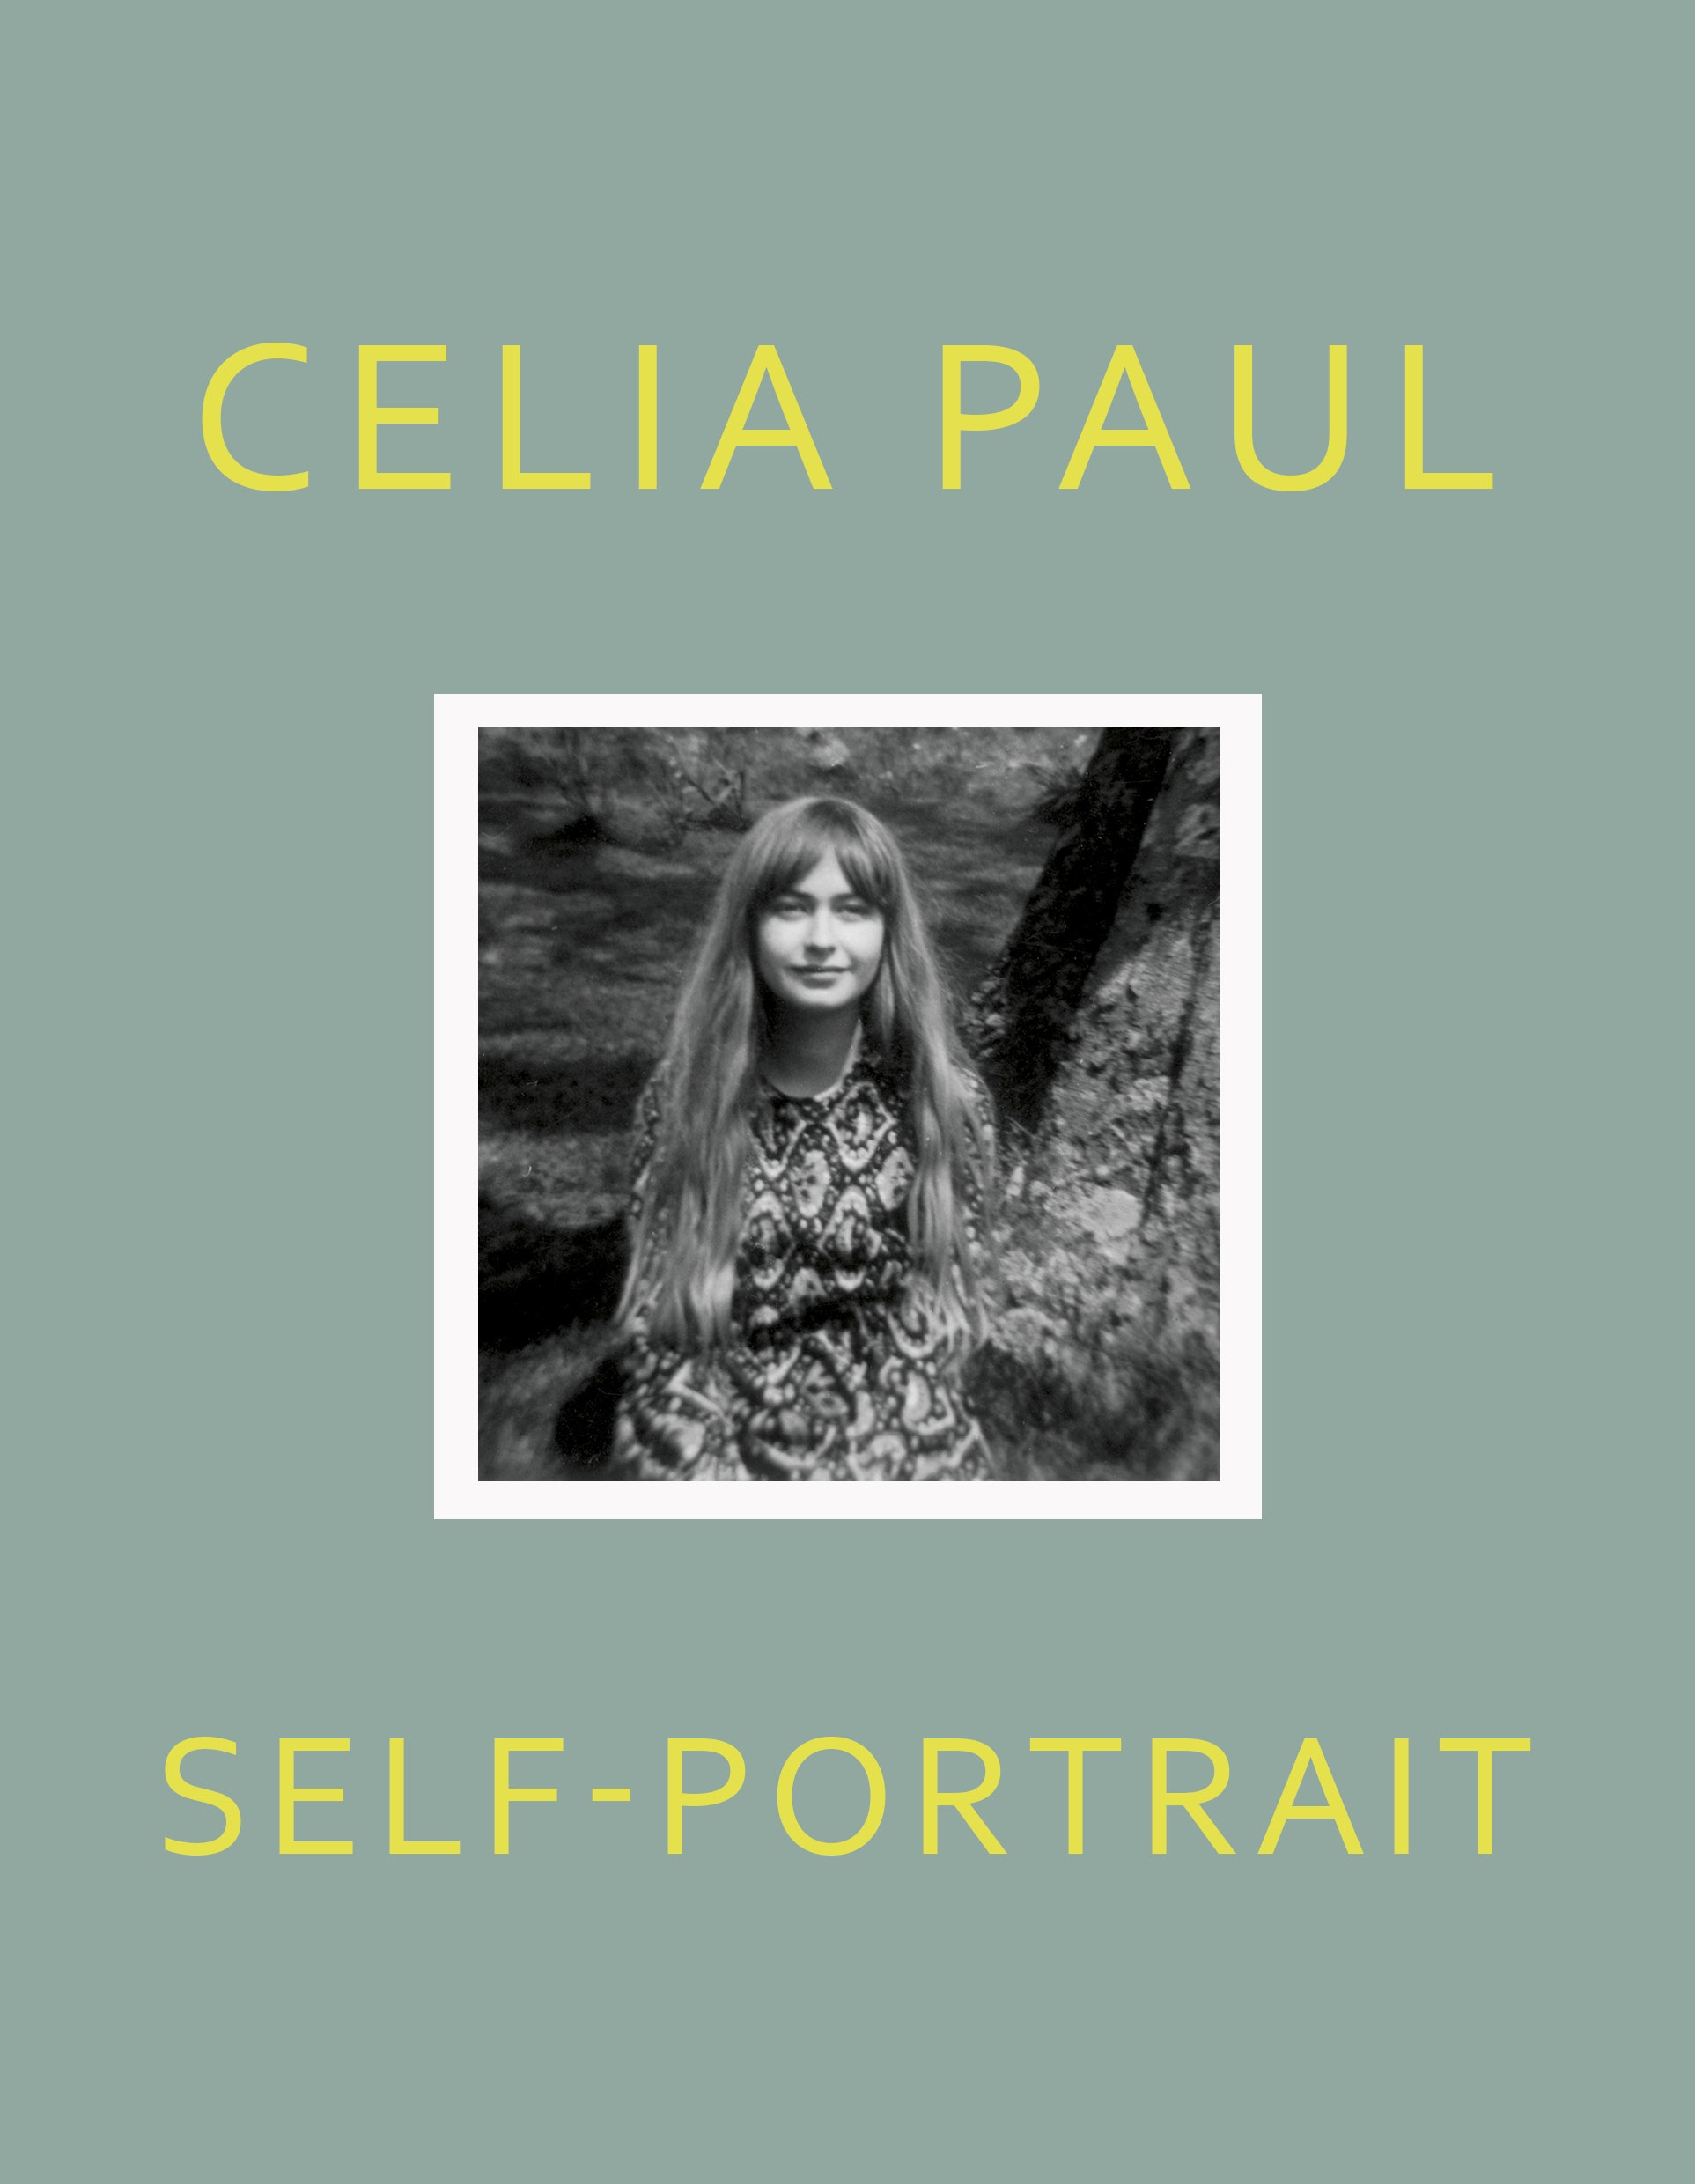 Book “Self-Portrait” by Celia Paul — November 7, 2019